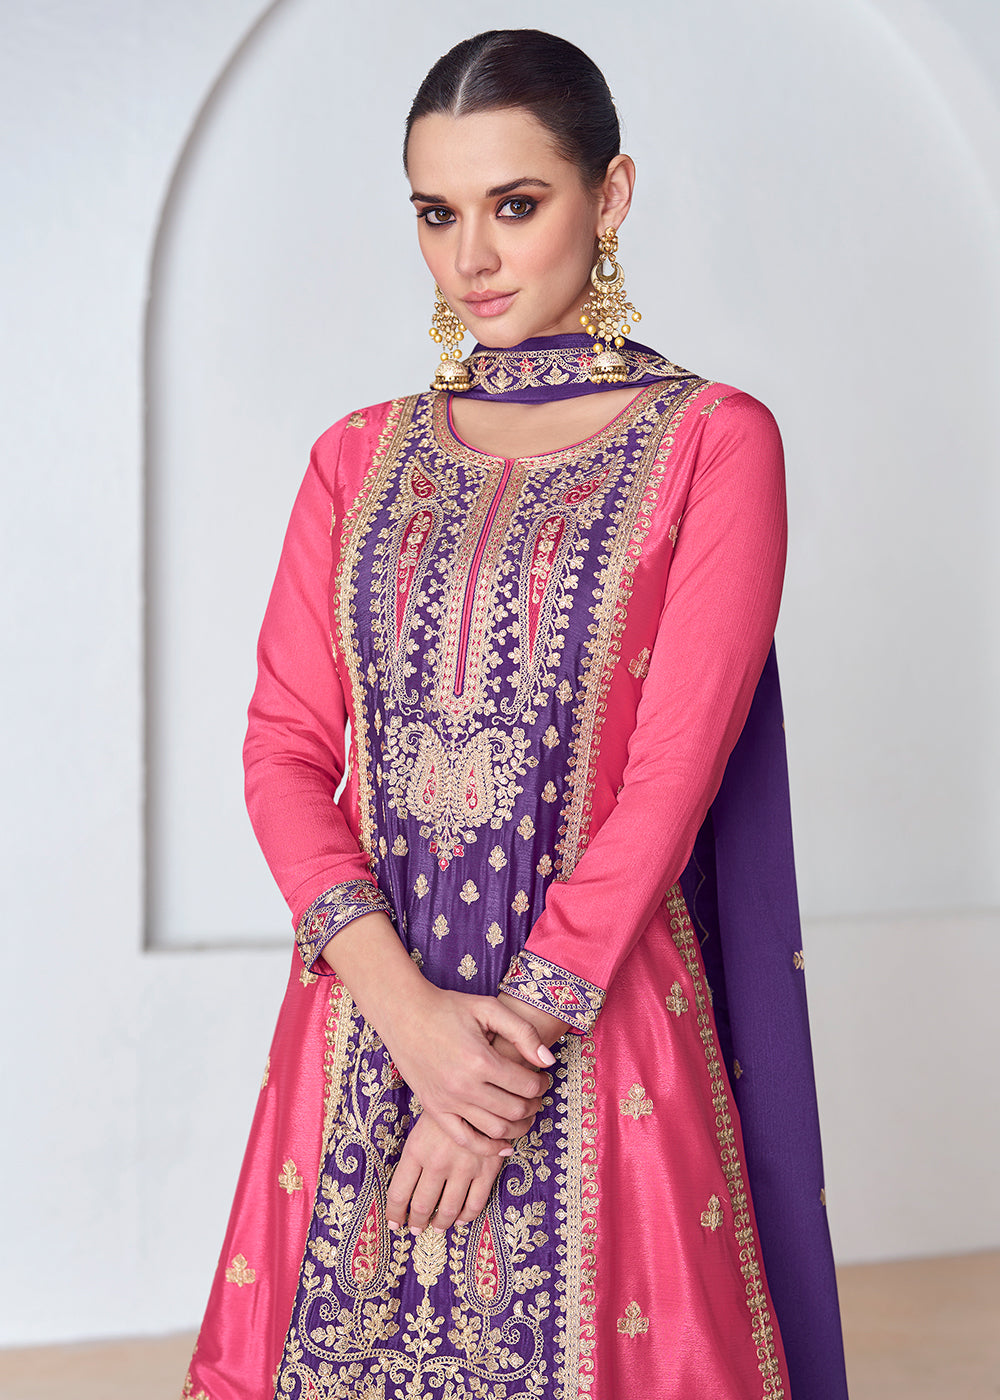 Buy Now Amazing Pink & Purple Chinnon Silk Wedding Festive Palazzo Suit Online in USA, UK, Canada, Germany, Australia & Worldwide at Empress Clothing.